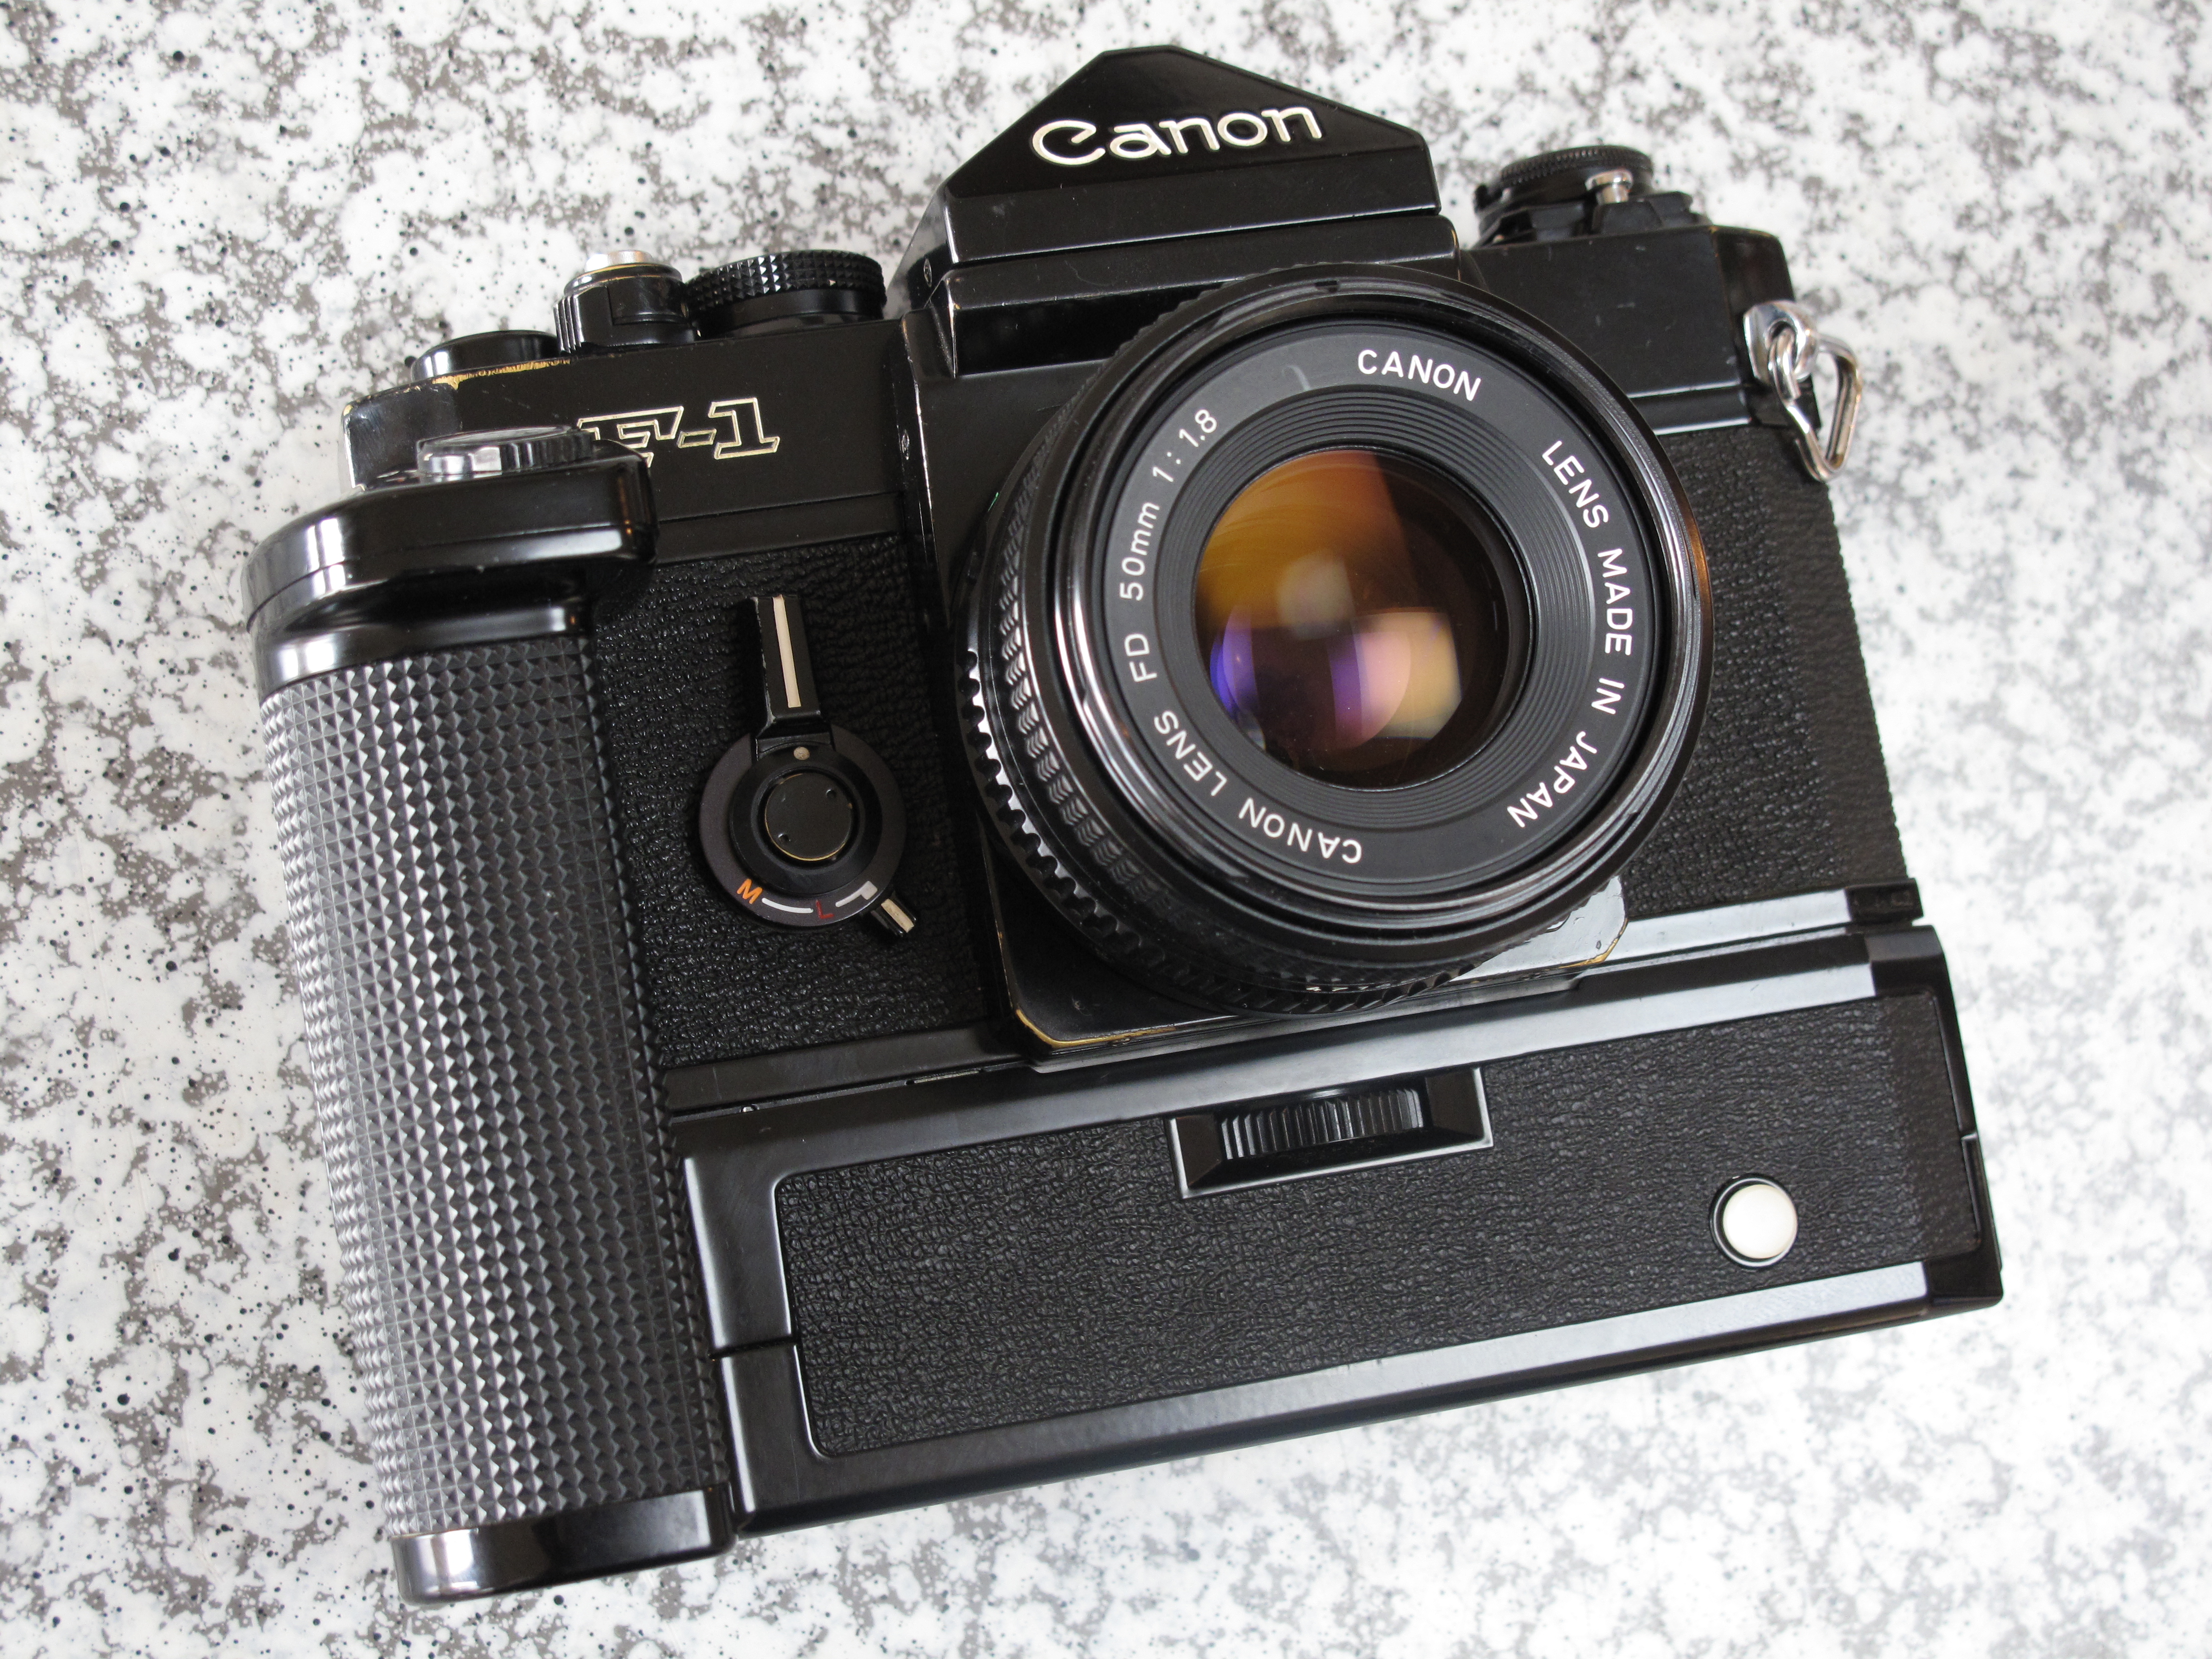 File:Canon F-1 with Power Winder F (4124346906).jpg - Wikimedia